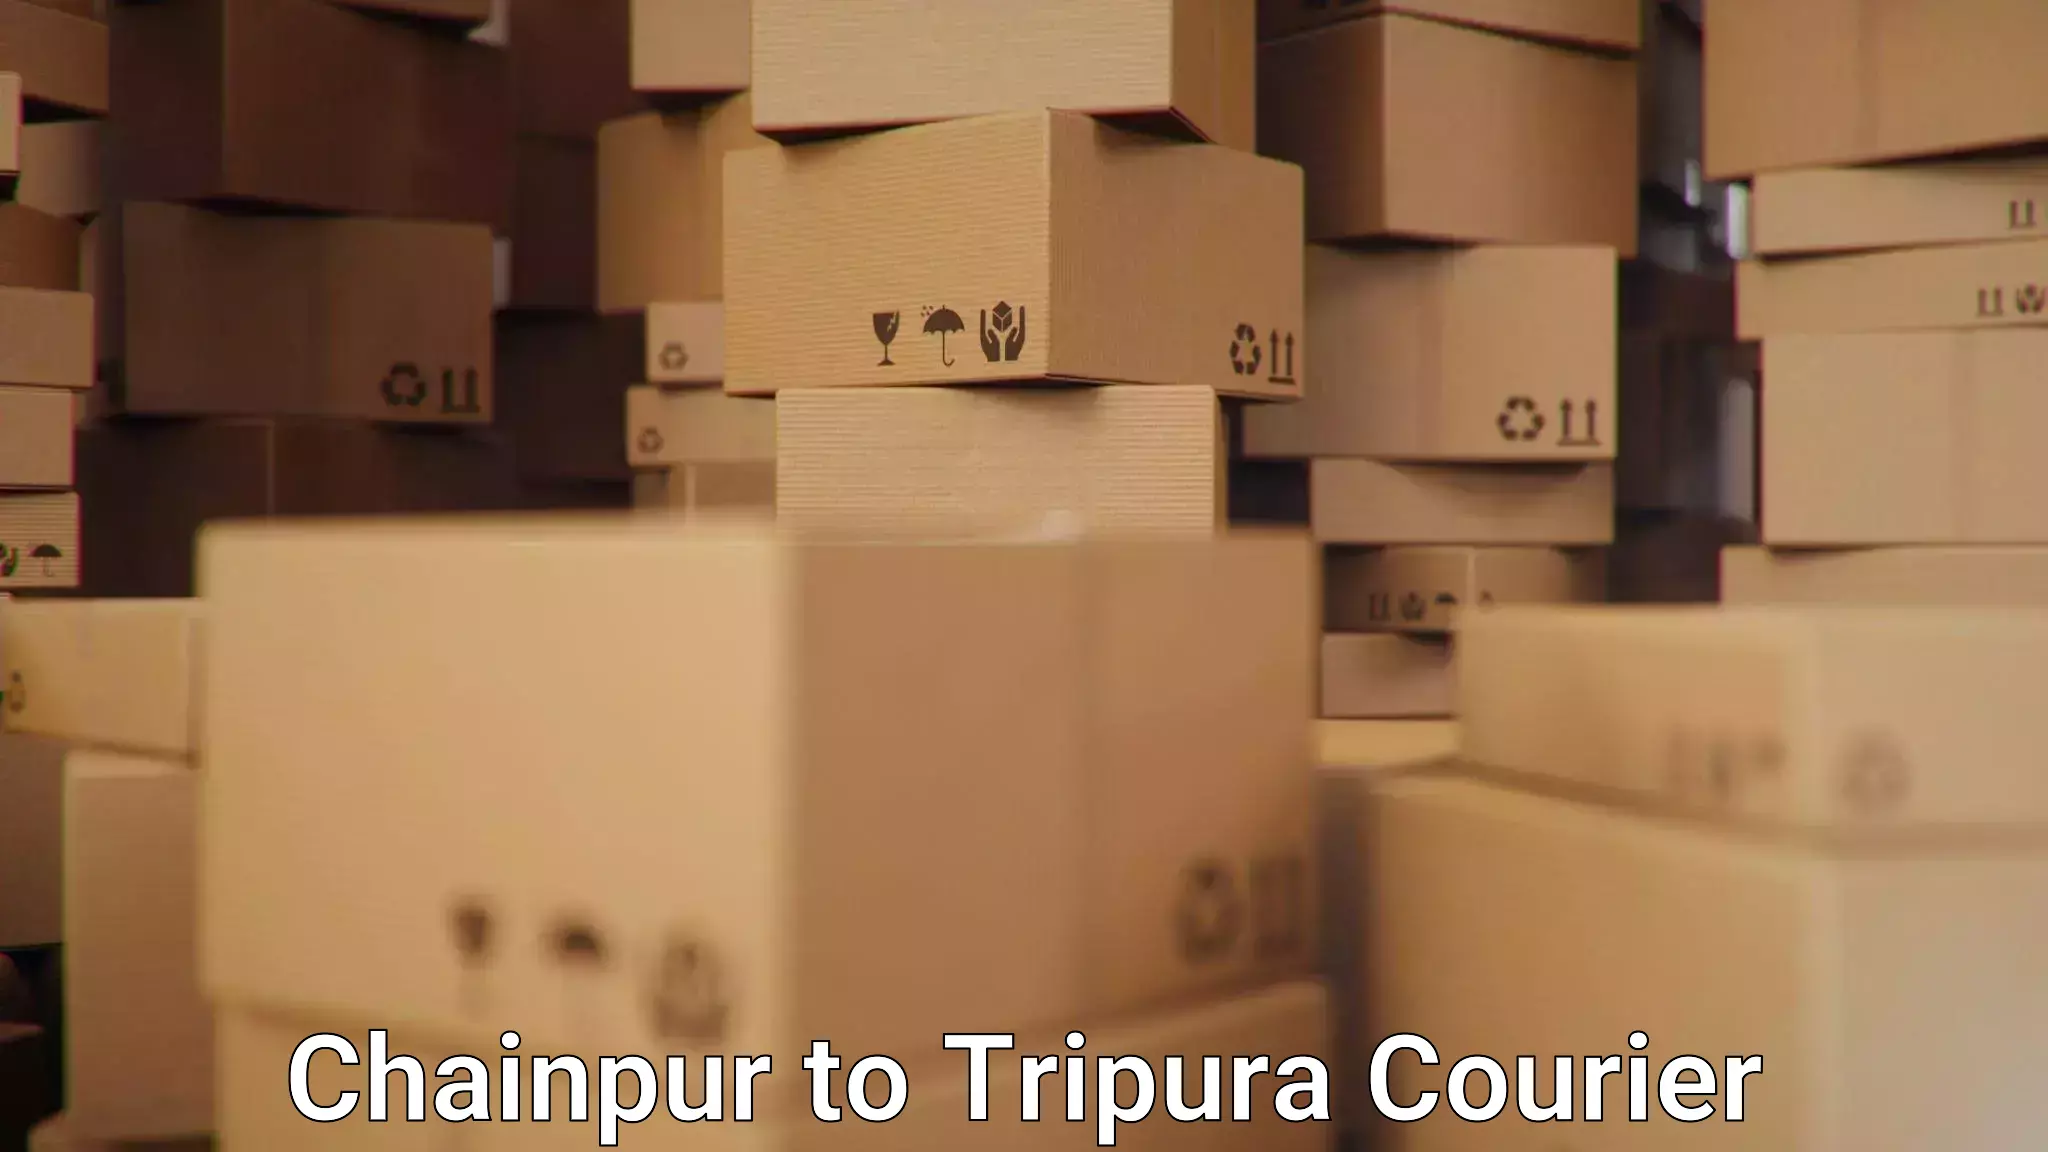 Courier service innovation Chainpur to Dharmanagar